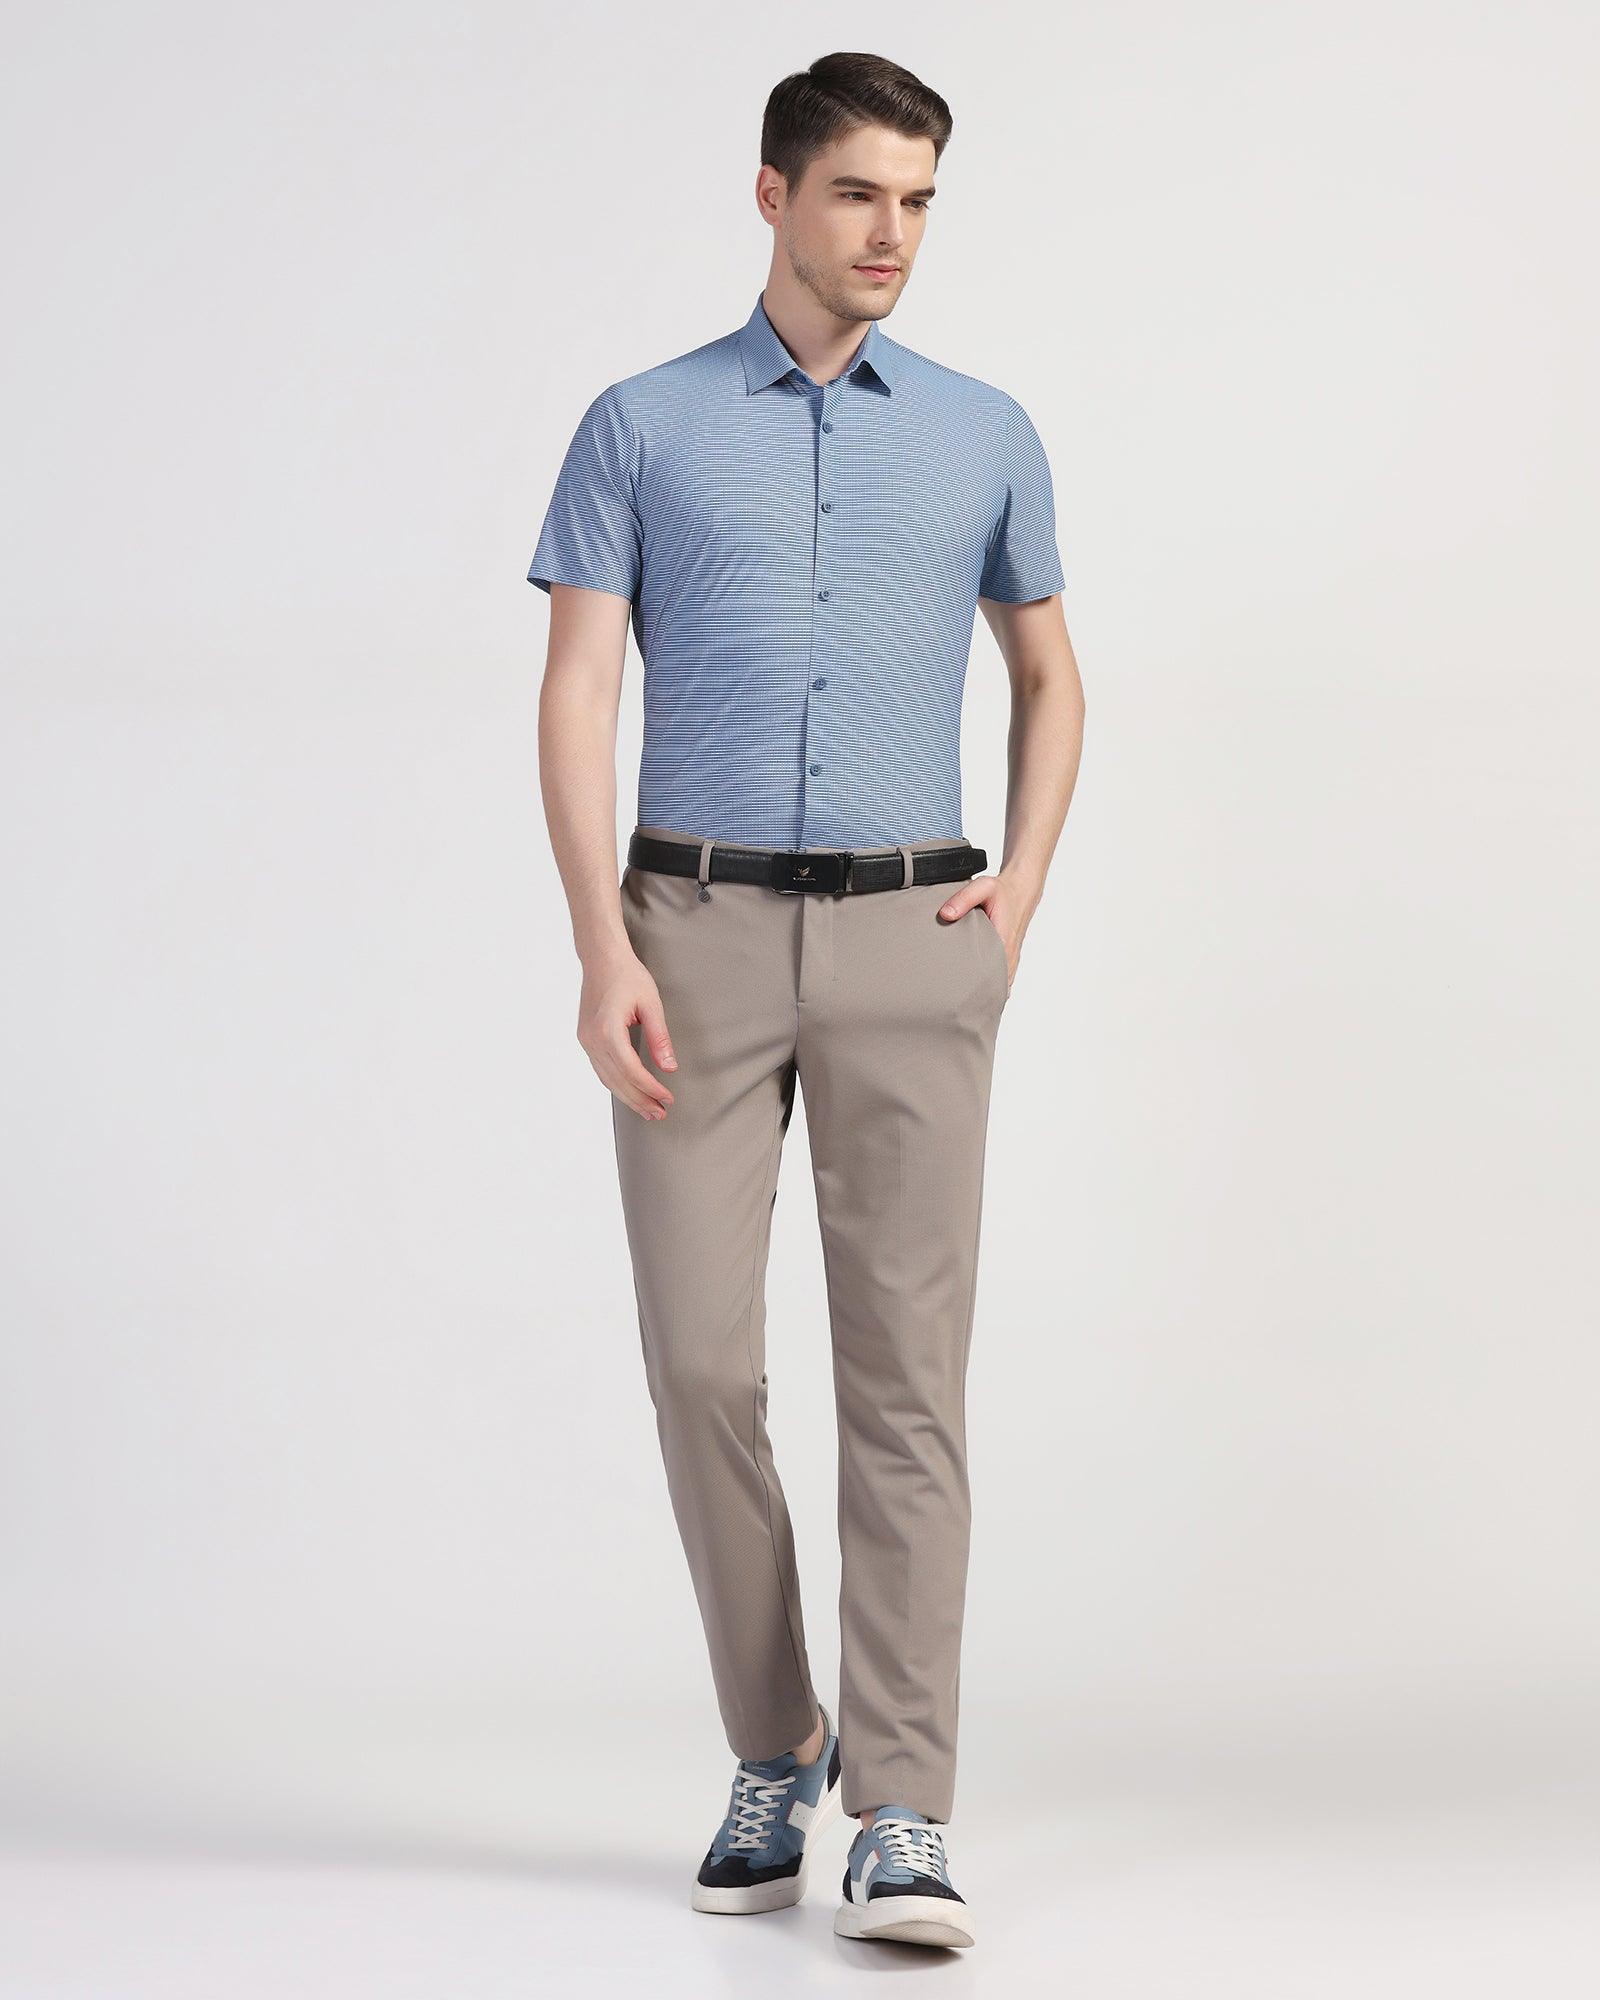 TechPro Formal Half Sleeve Greyish Blue Printed Shirt - Joel